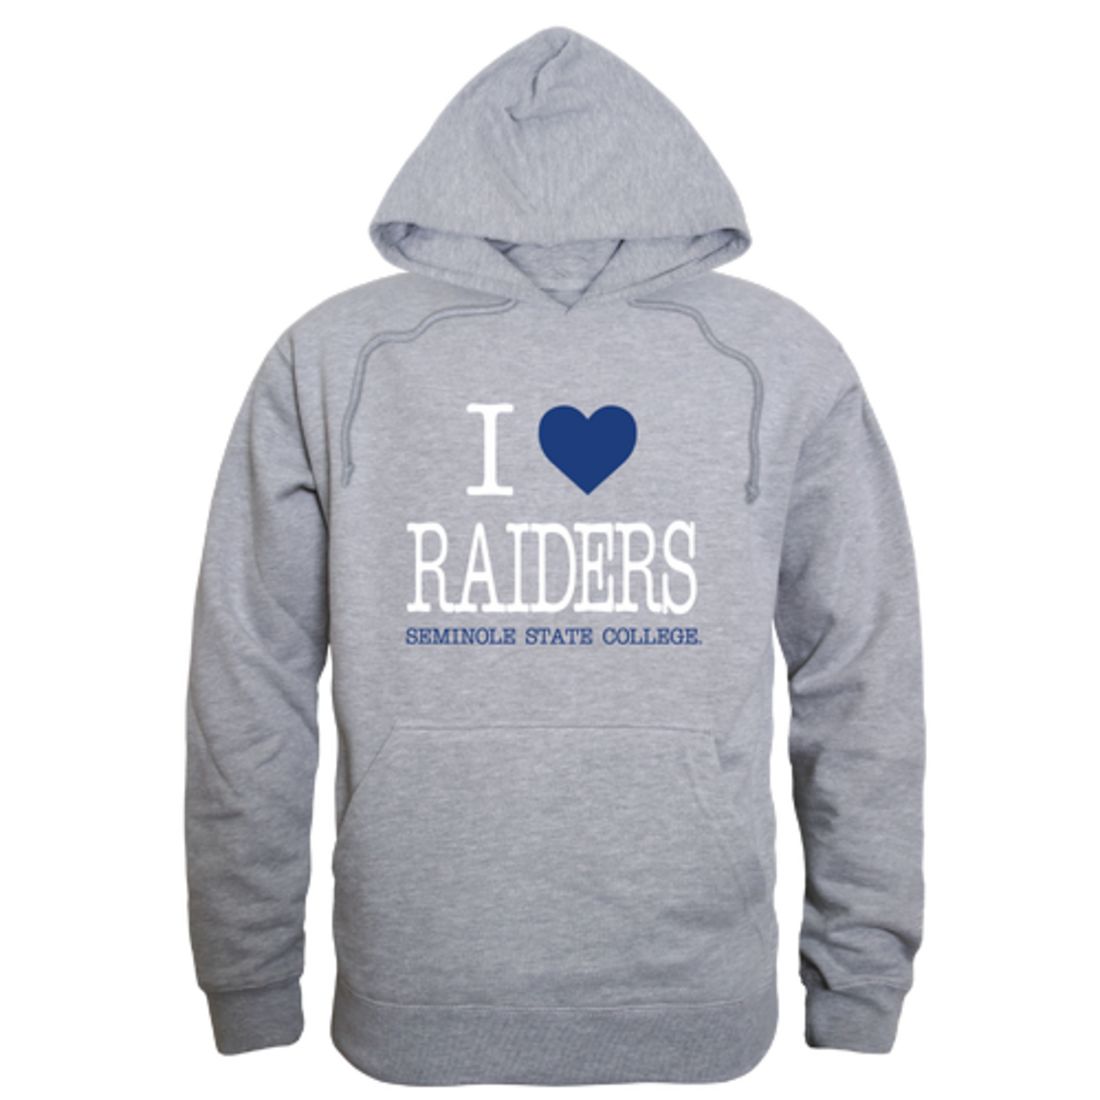 I-Love-Seminole-State-College-Raiders-Fleece-Hoodie-Sweatshirts